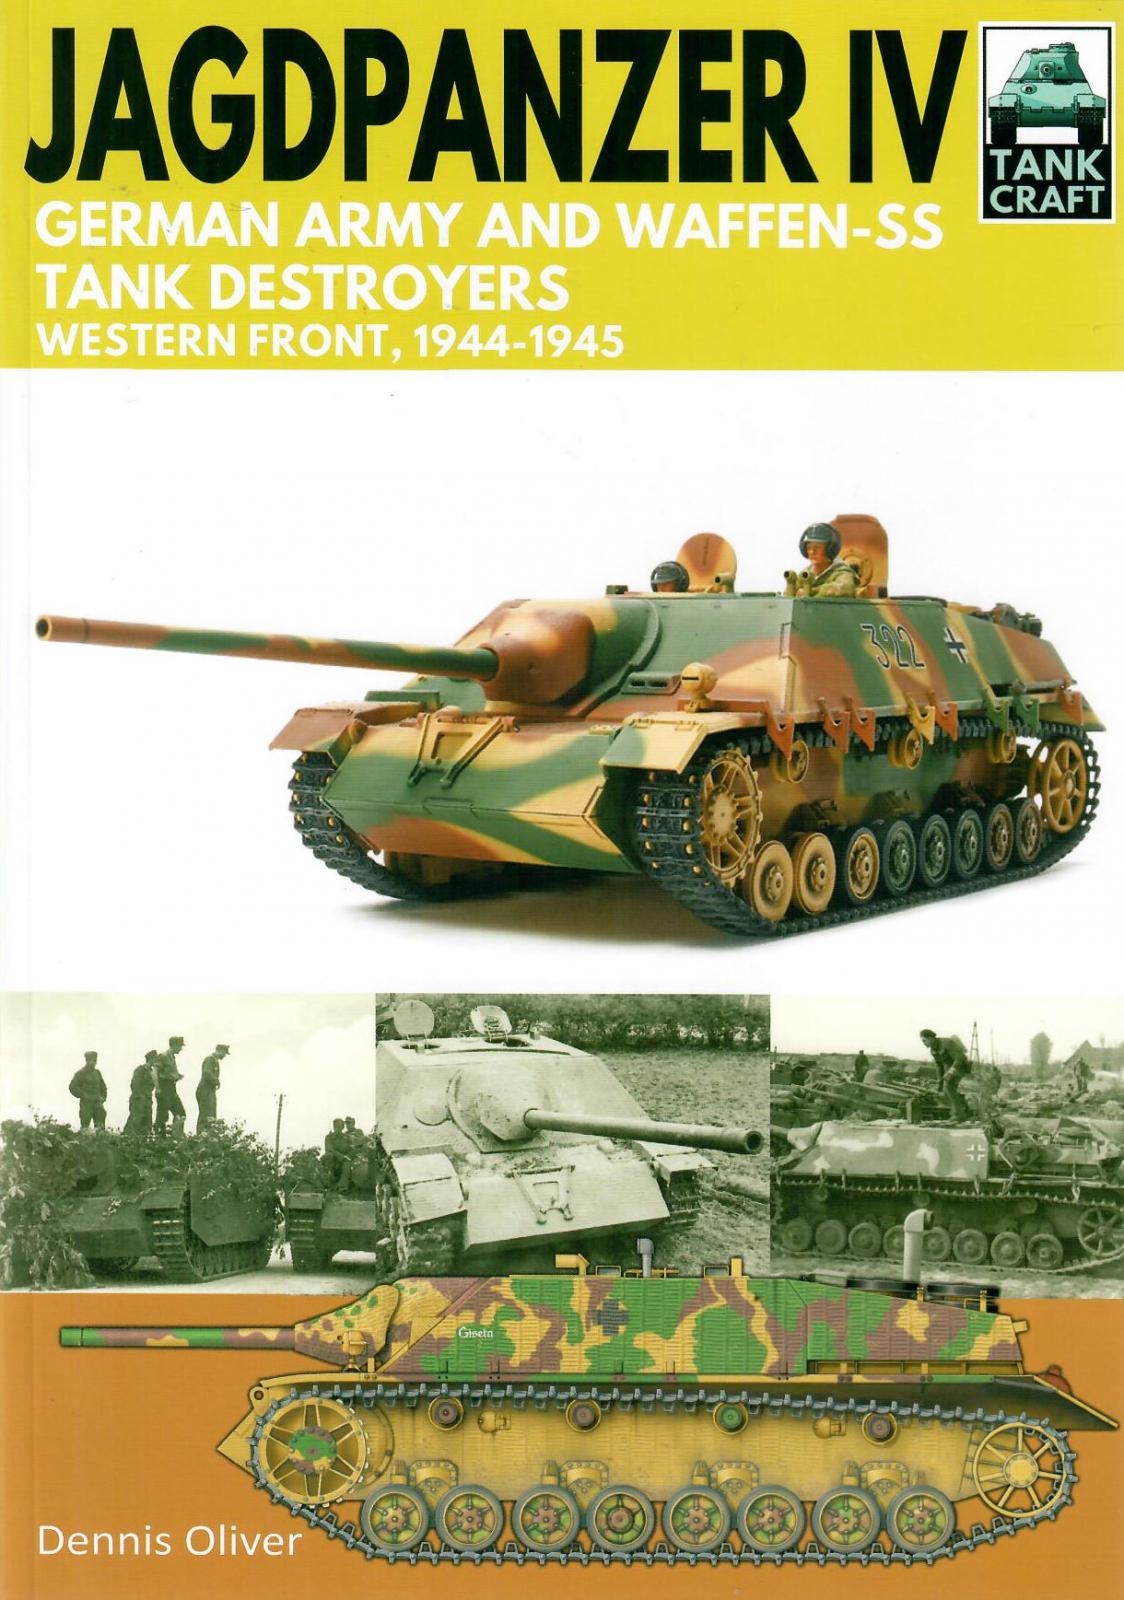 Jagdpanzer IV, German Army and Waffen-SS Tank Destroyer